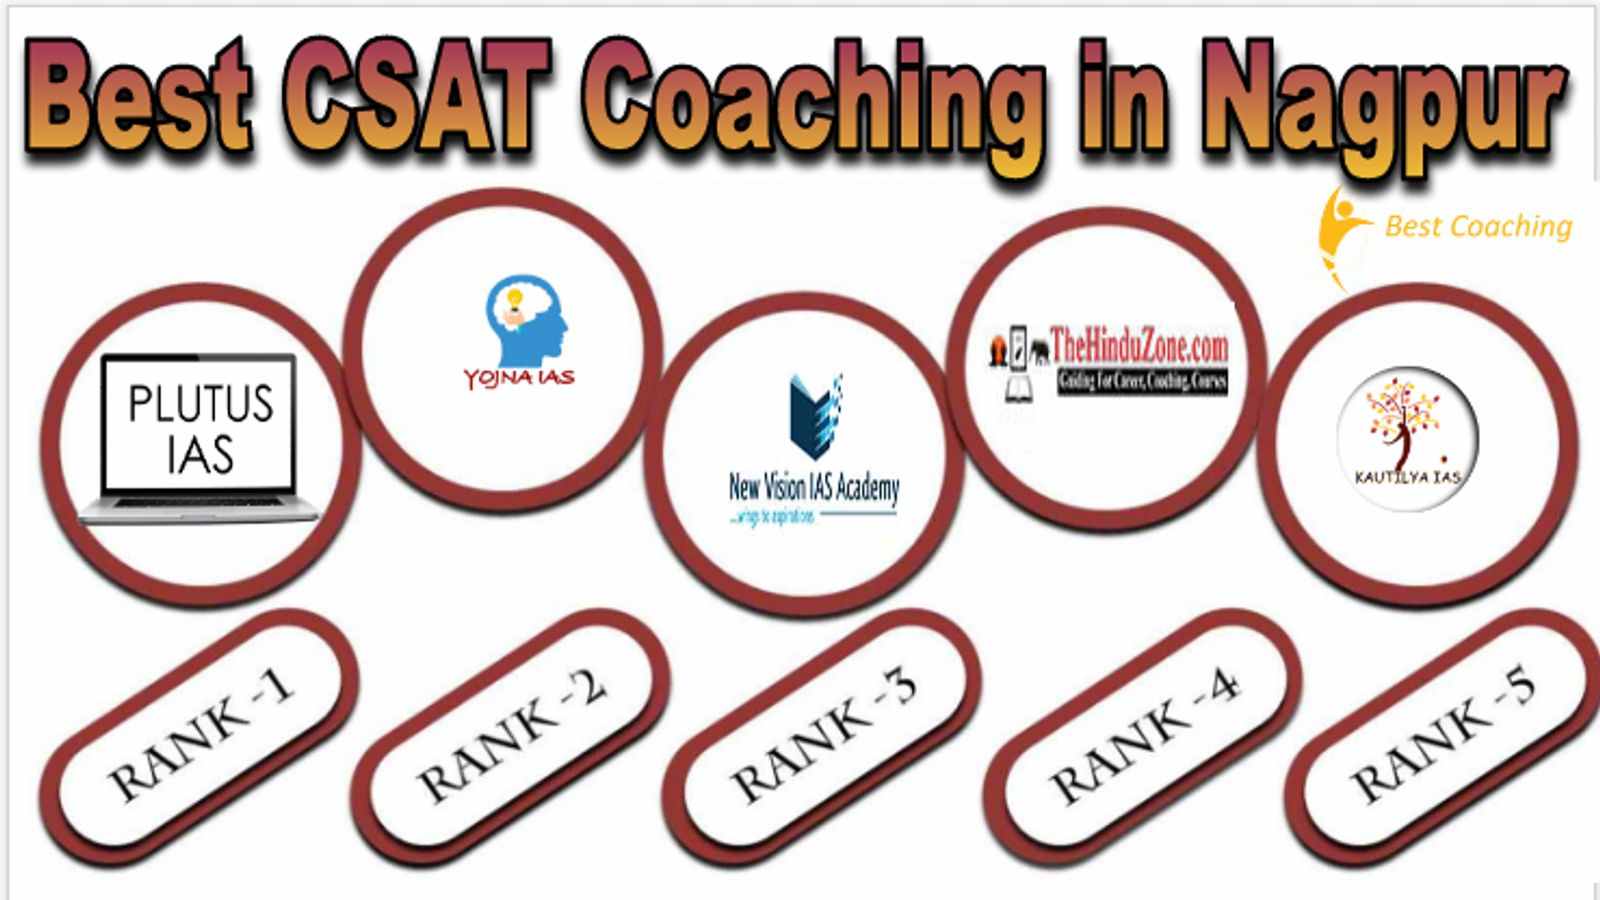 Best CSAT Coaching in Nagpur